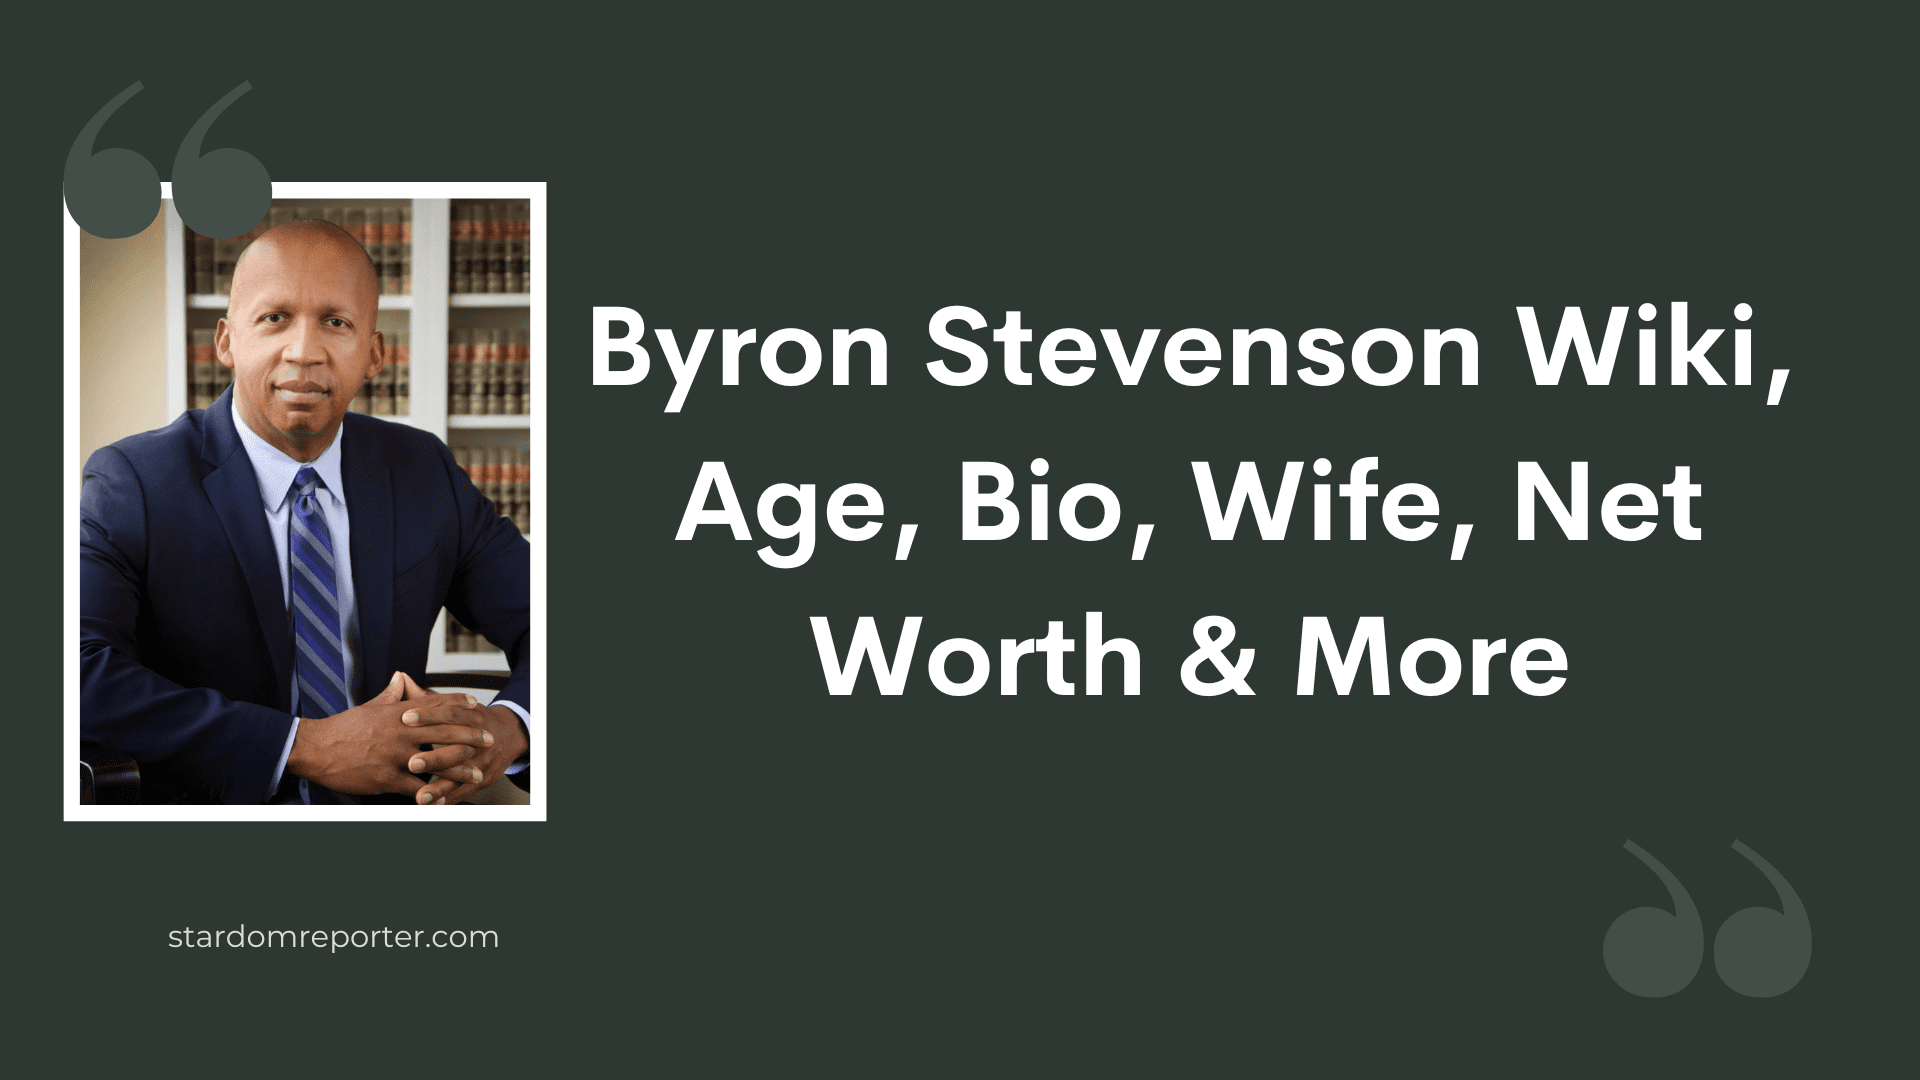 Byron Stevenson Wiki, Age, Bio, Wife, Net Worth & More - 19